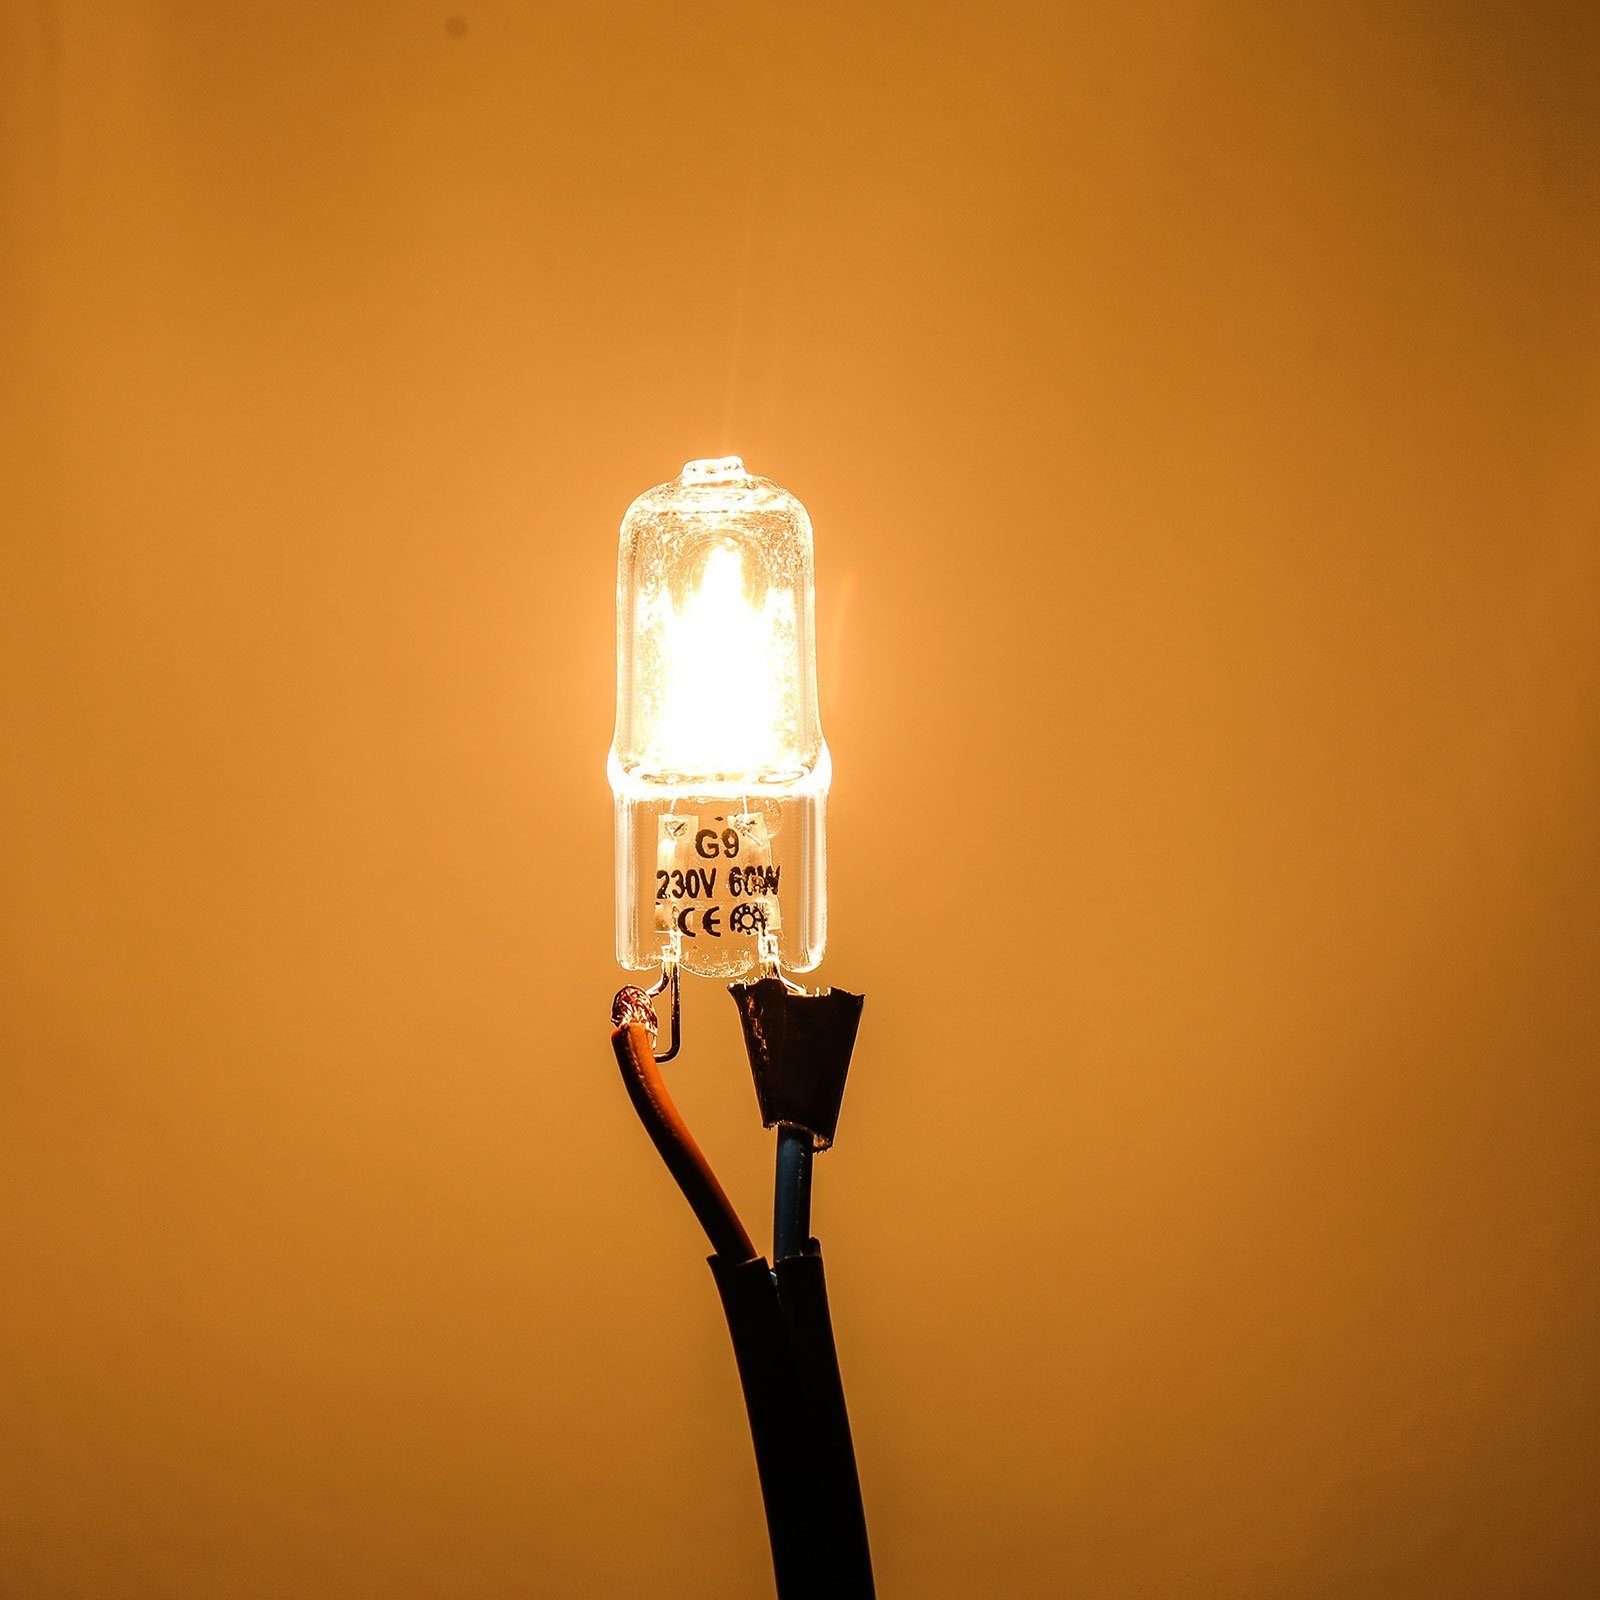 Halogen Glühlampe Halogen fur ersetzen 40W 60W Flutlichtstrahler LED Glasfaser, iscooter Kapsel-Birne Leuchter, G9 220V-240V, 25W Glühbirnen Wandlampe, Lampen, Leuchtmittel, Halogen, Lampen, Stehlampe 10x